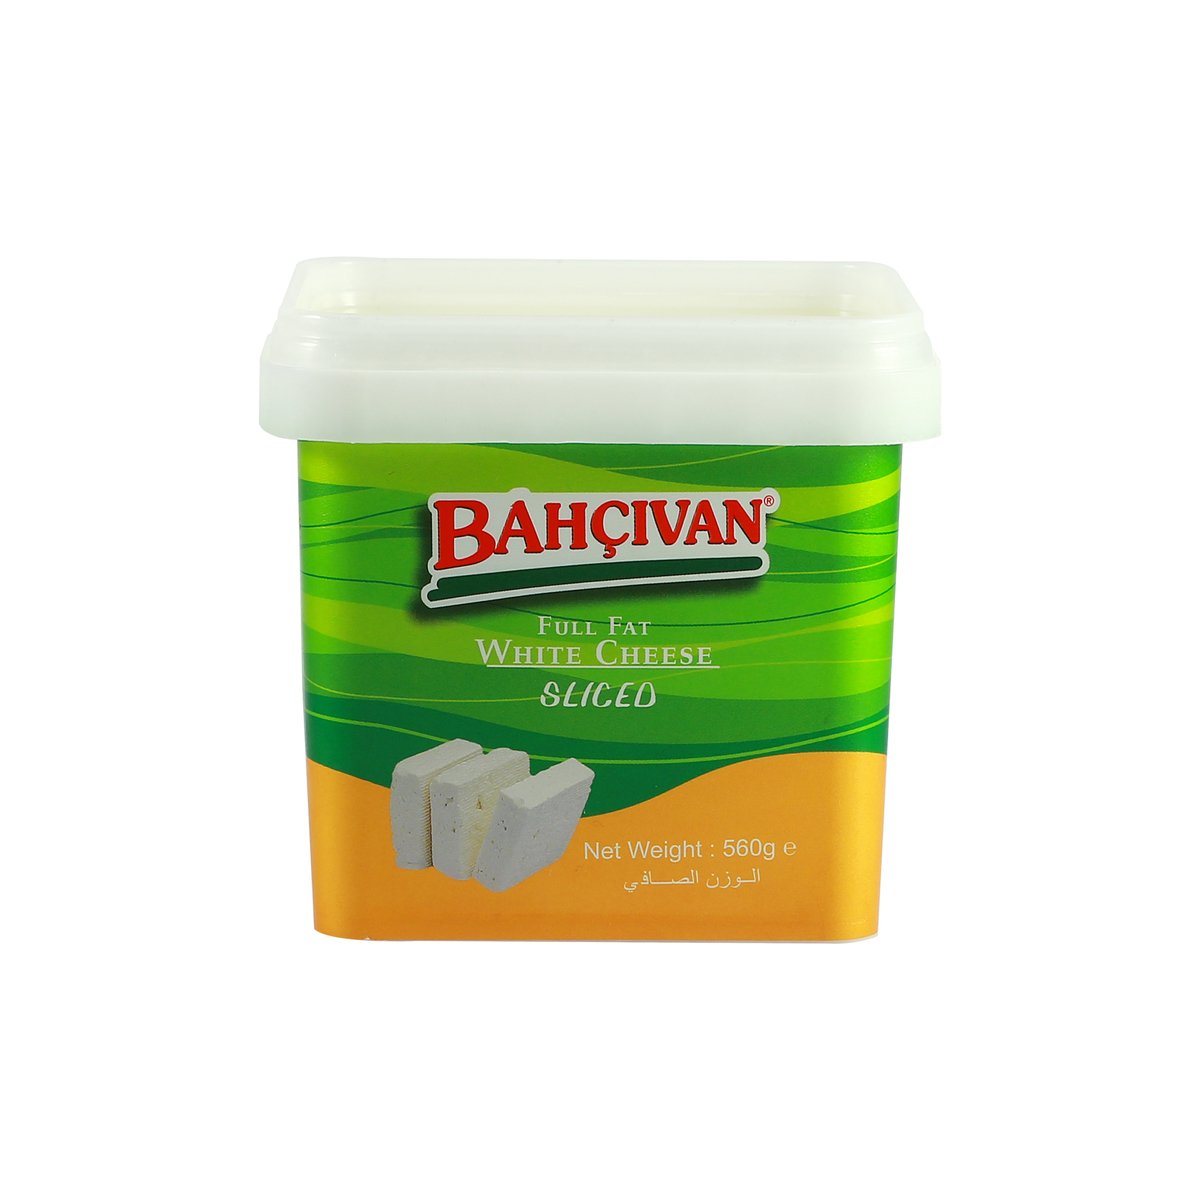 Bahcivan Sliced White Cheese Full Fat 560g